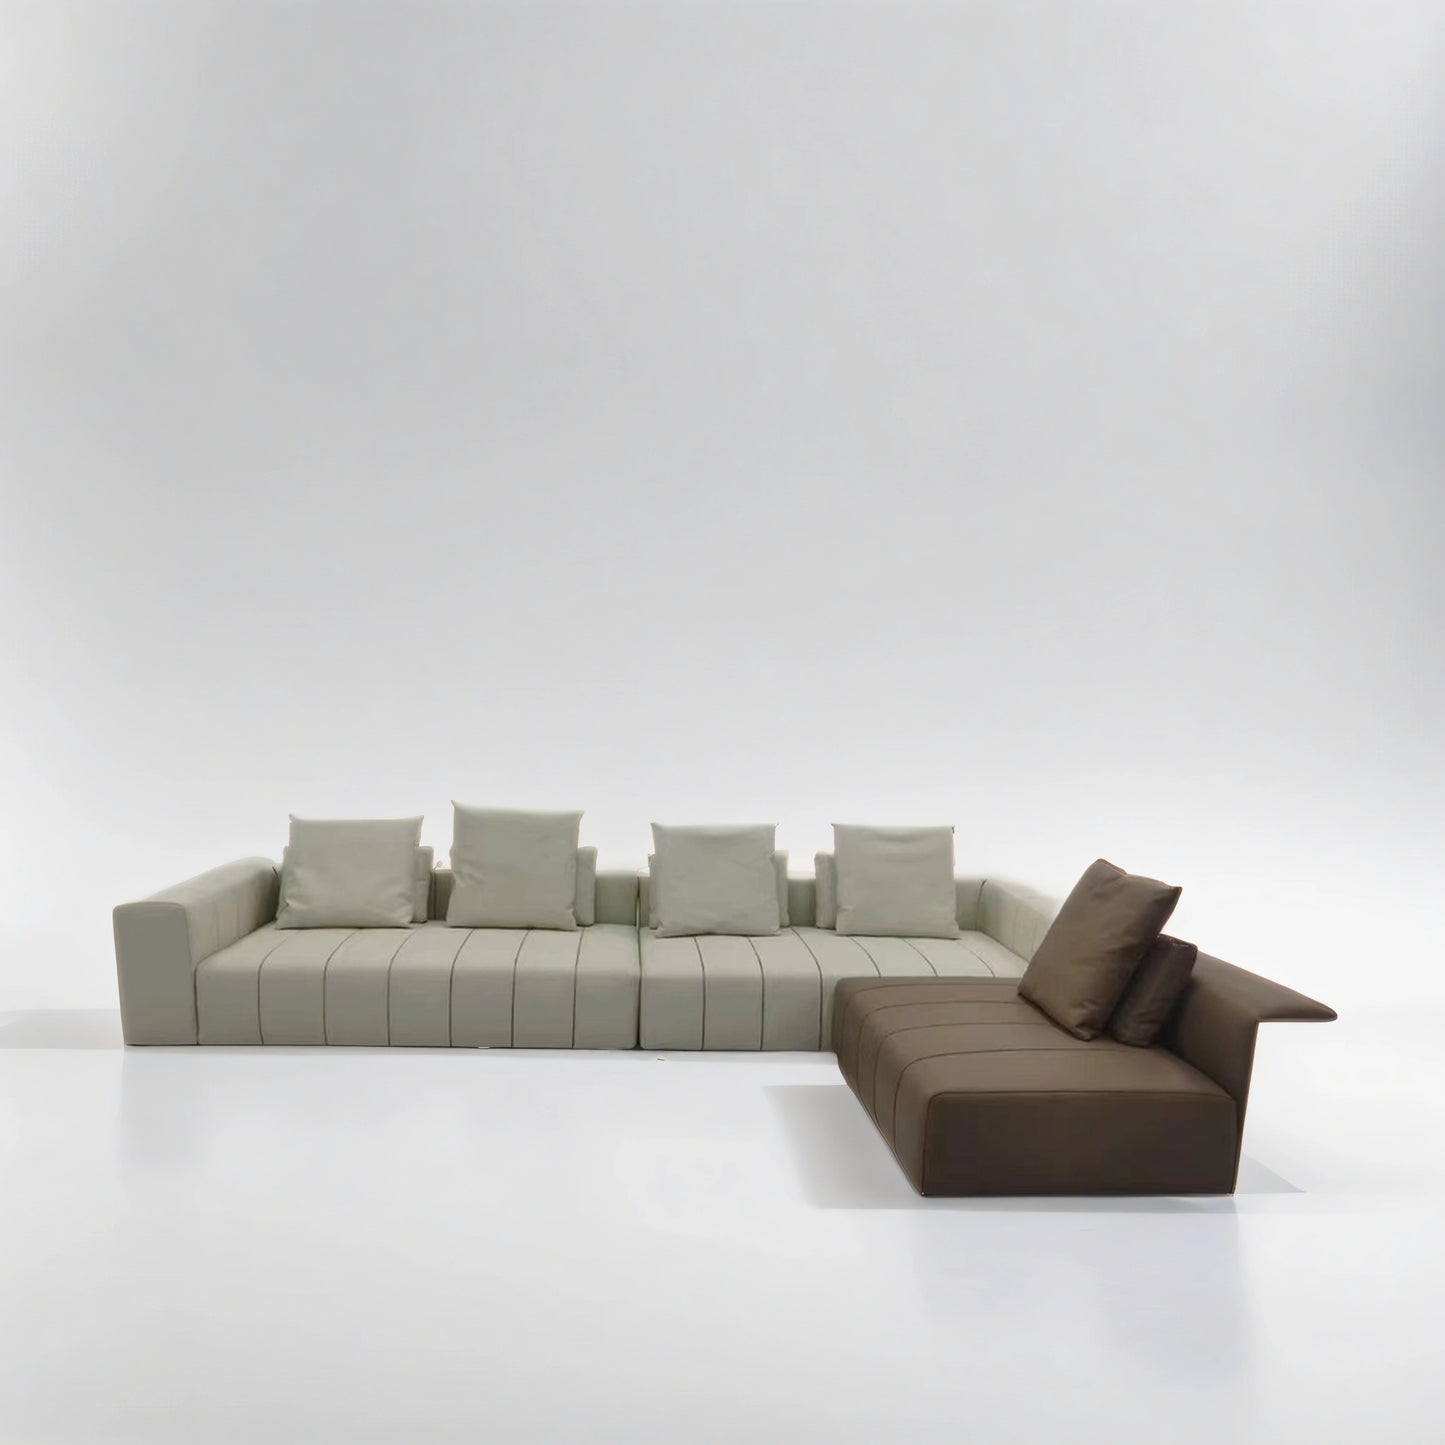 Lanka piano keys leather sofa Italian minimalist design corner leather sofa